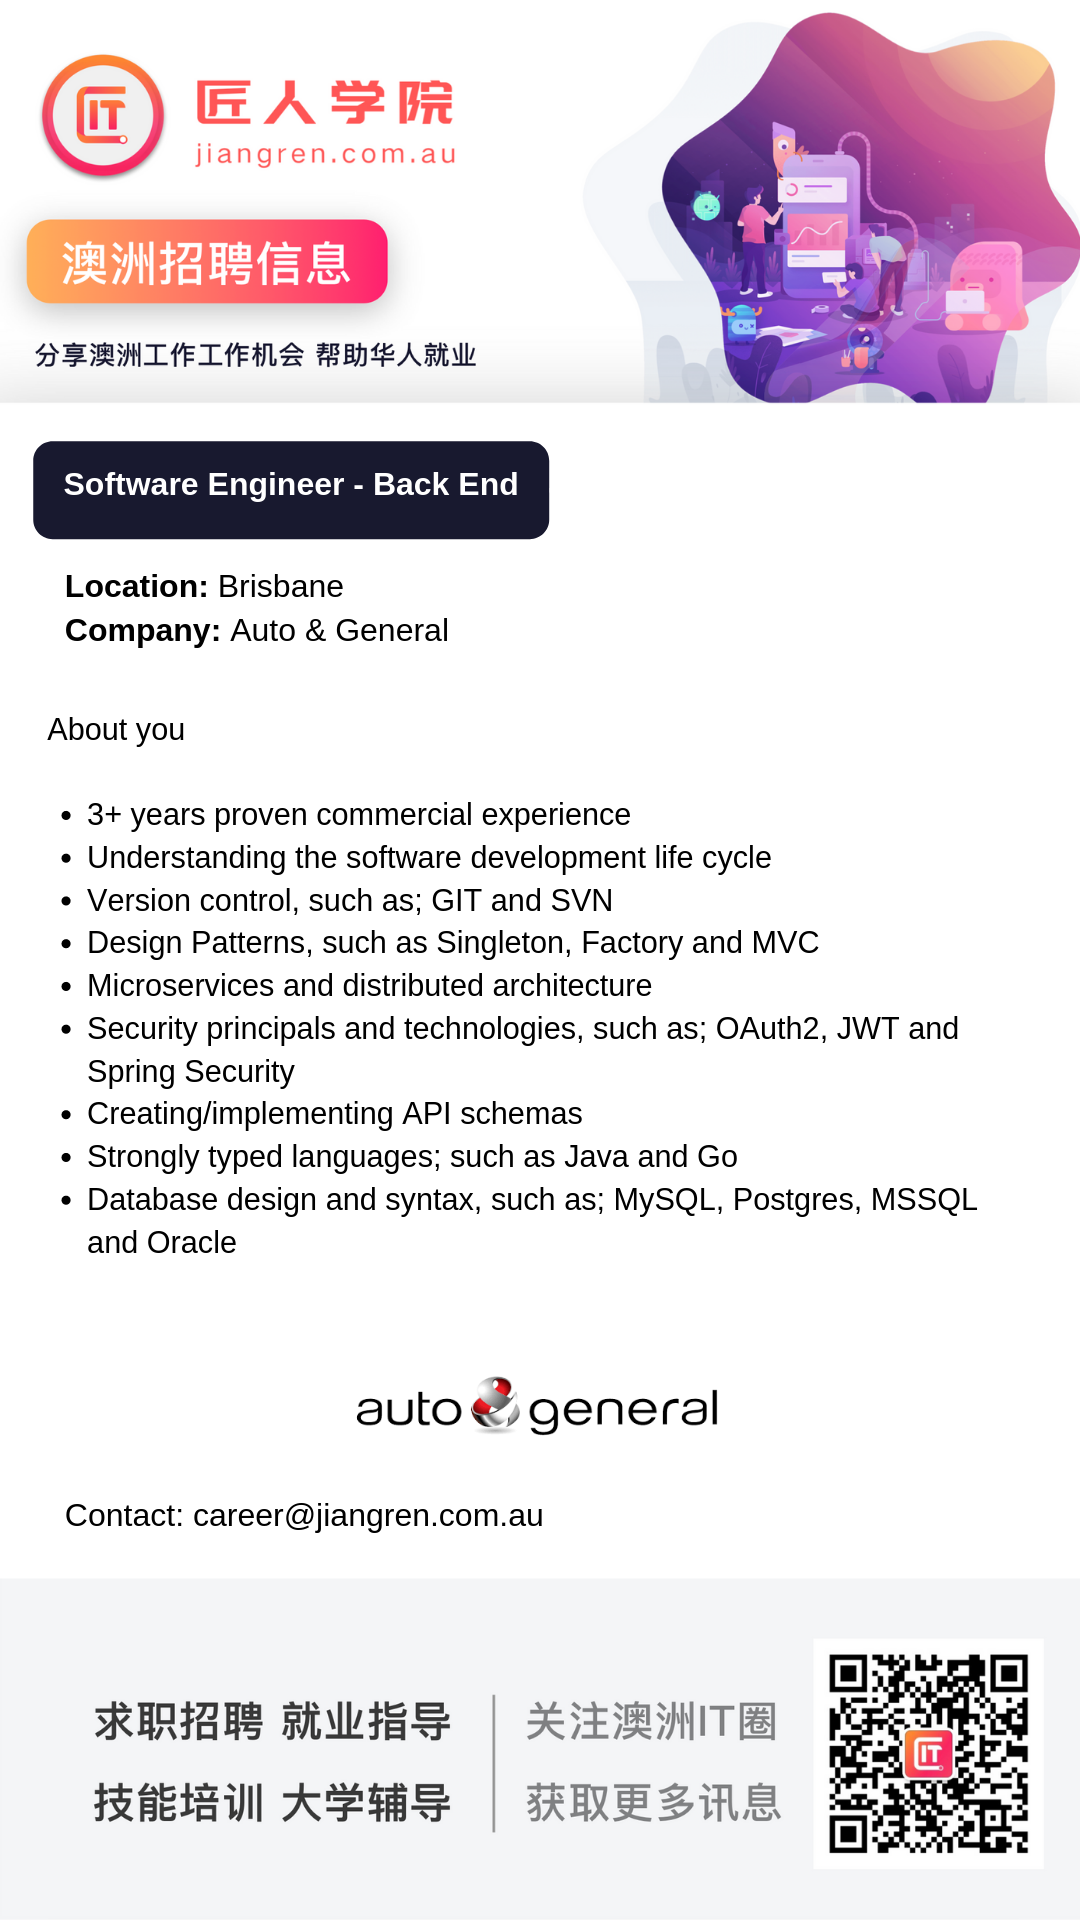 Auto&General_Software_Banc-end